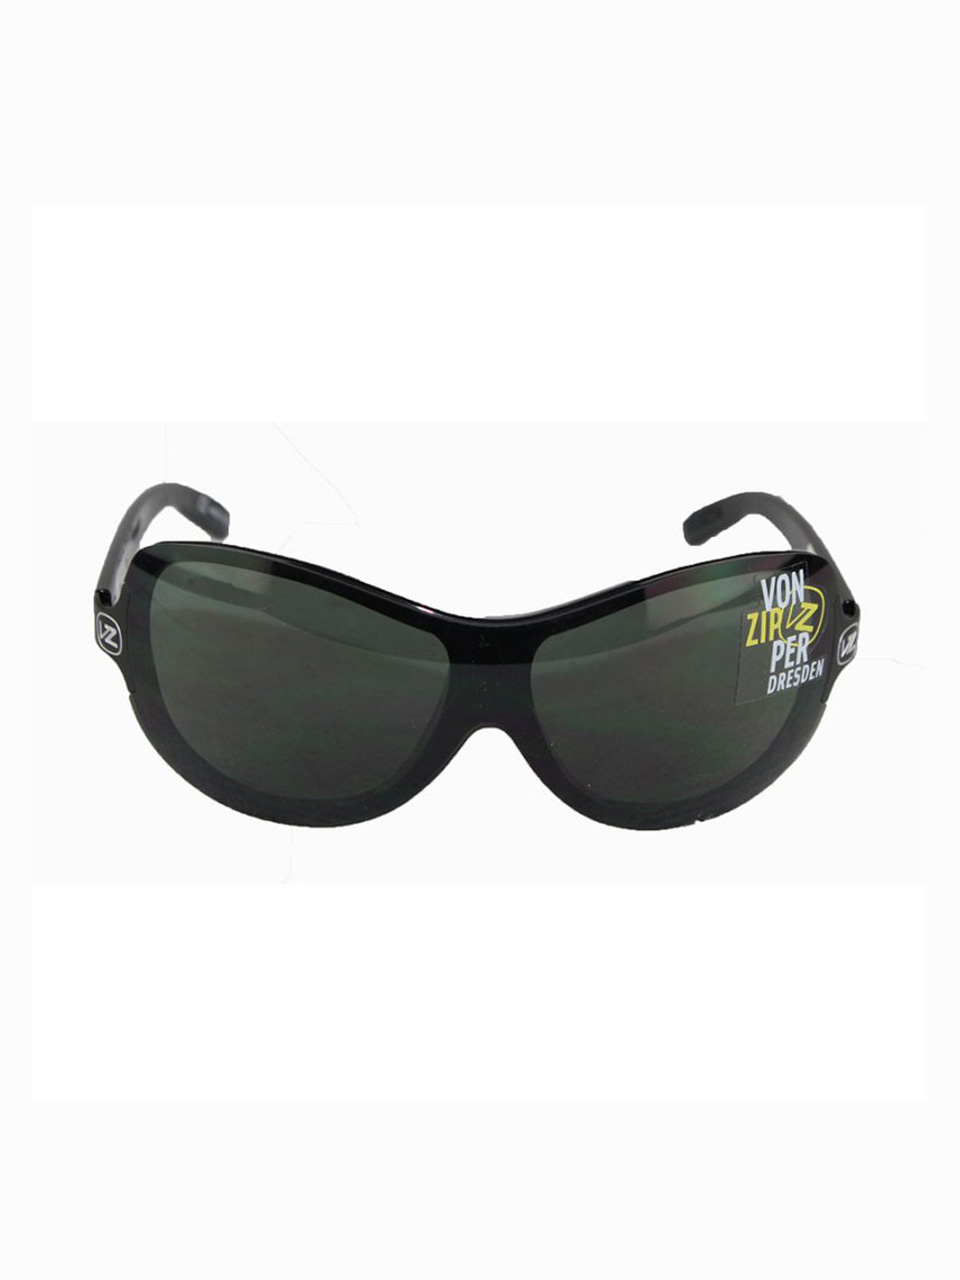 Sunglasses Von Zipper Dresden 1